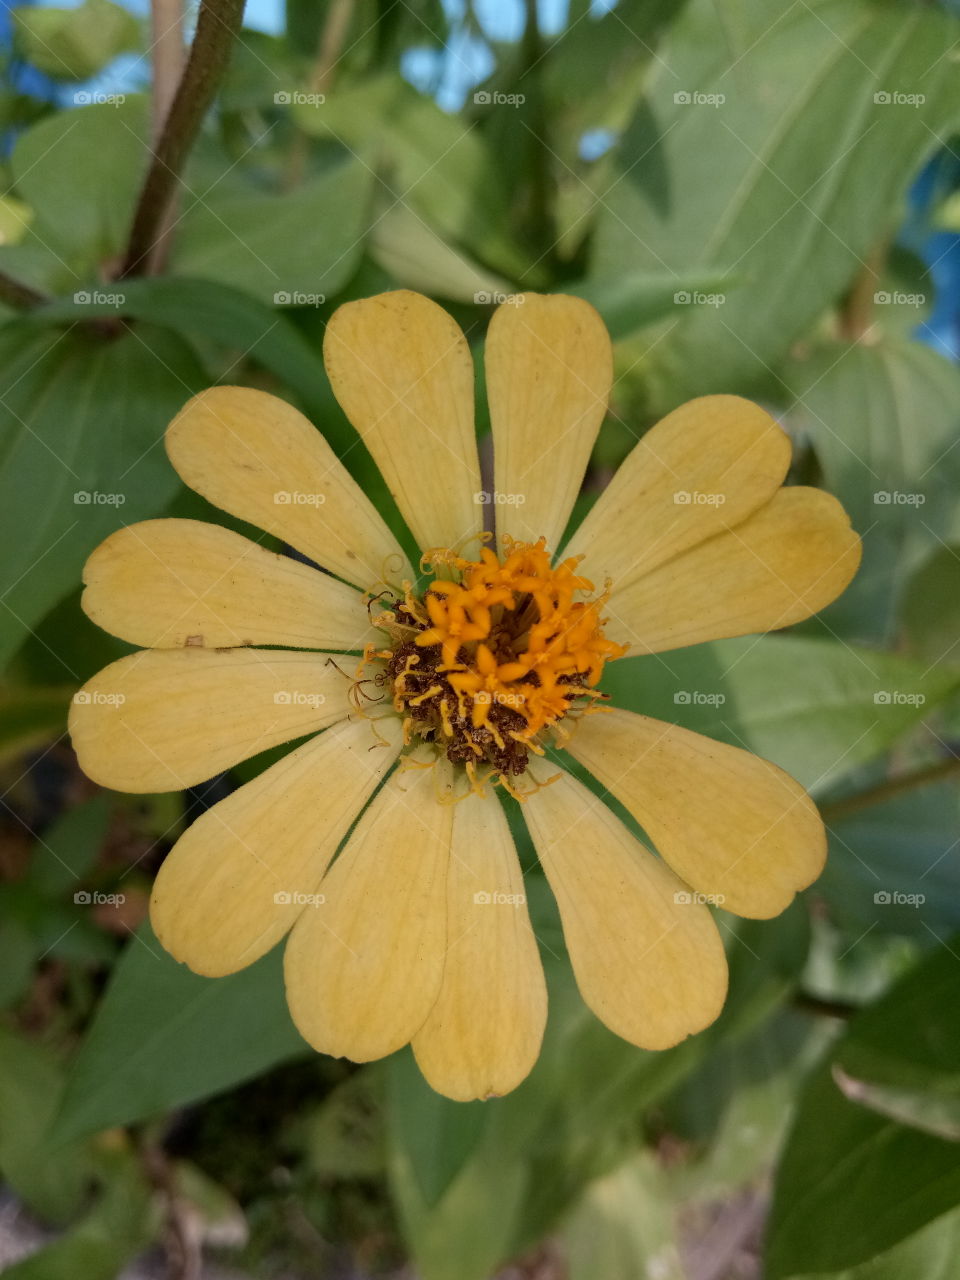 flower
yellow